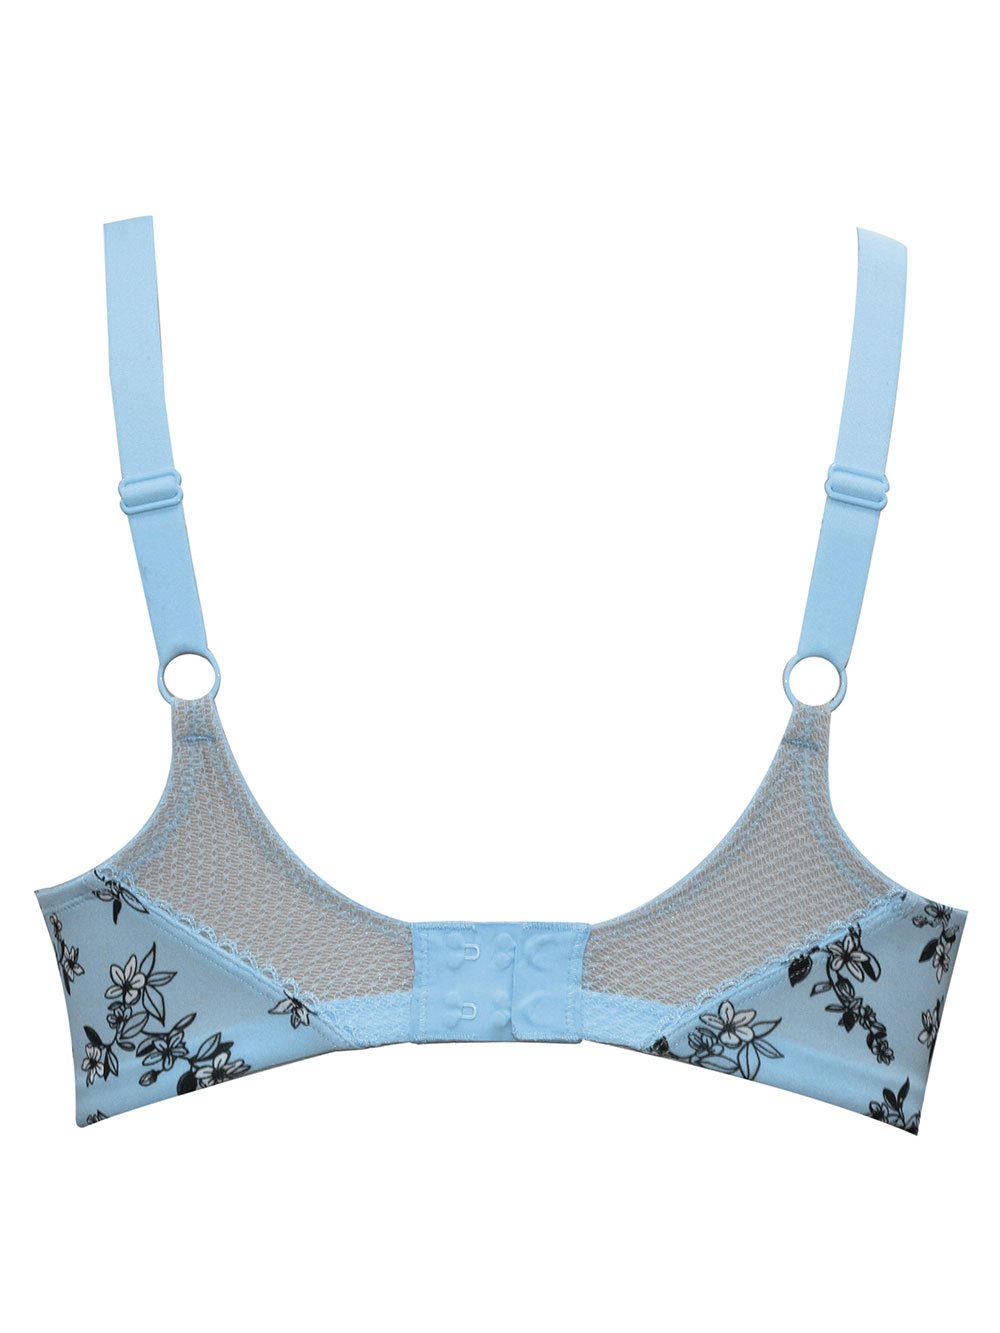 Ivy Contour Bandless Bra - Dream Blue With Floral Print - HauteFlair